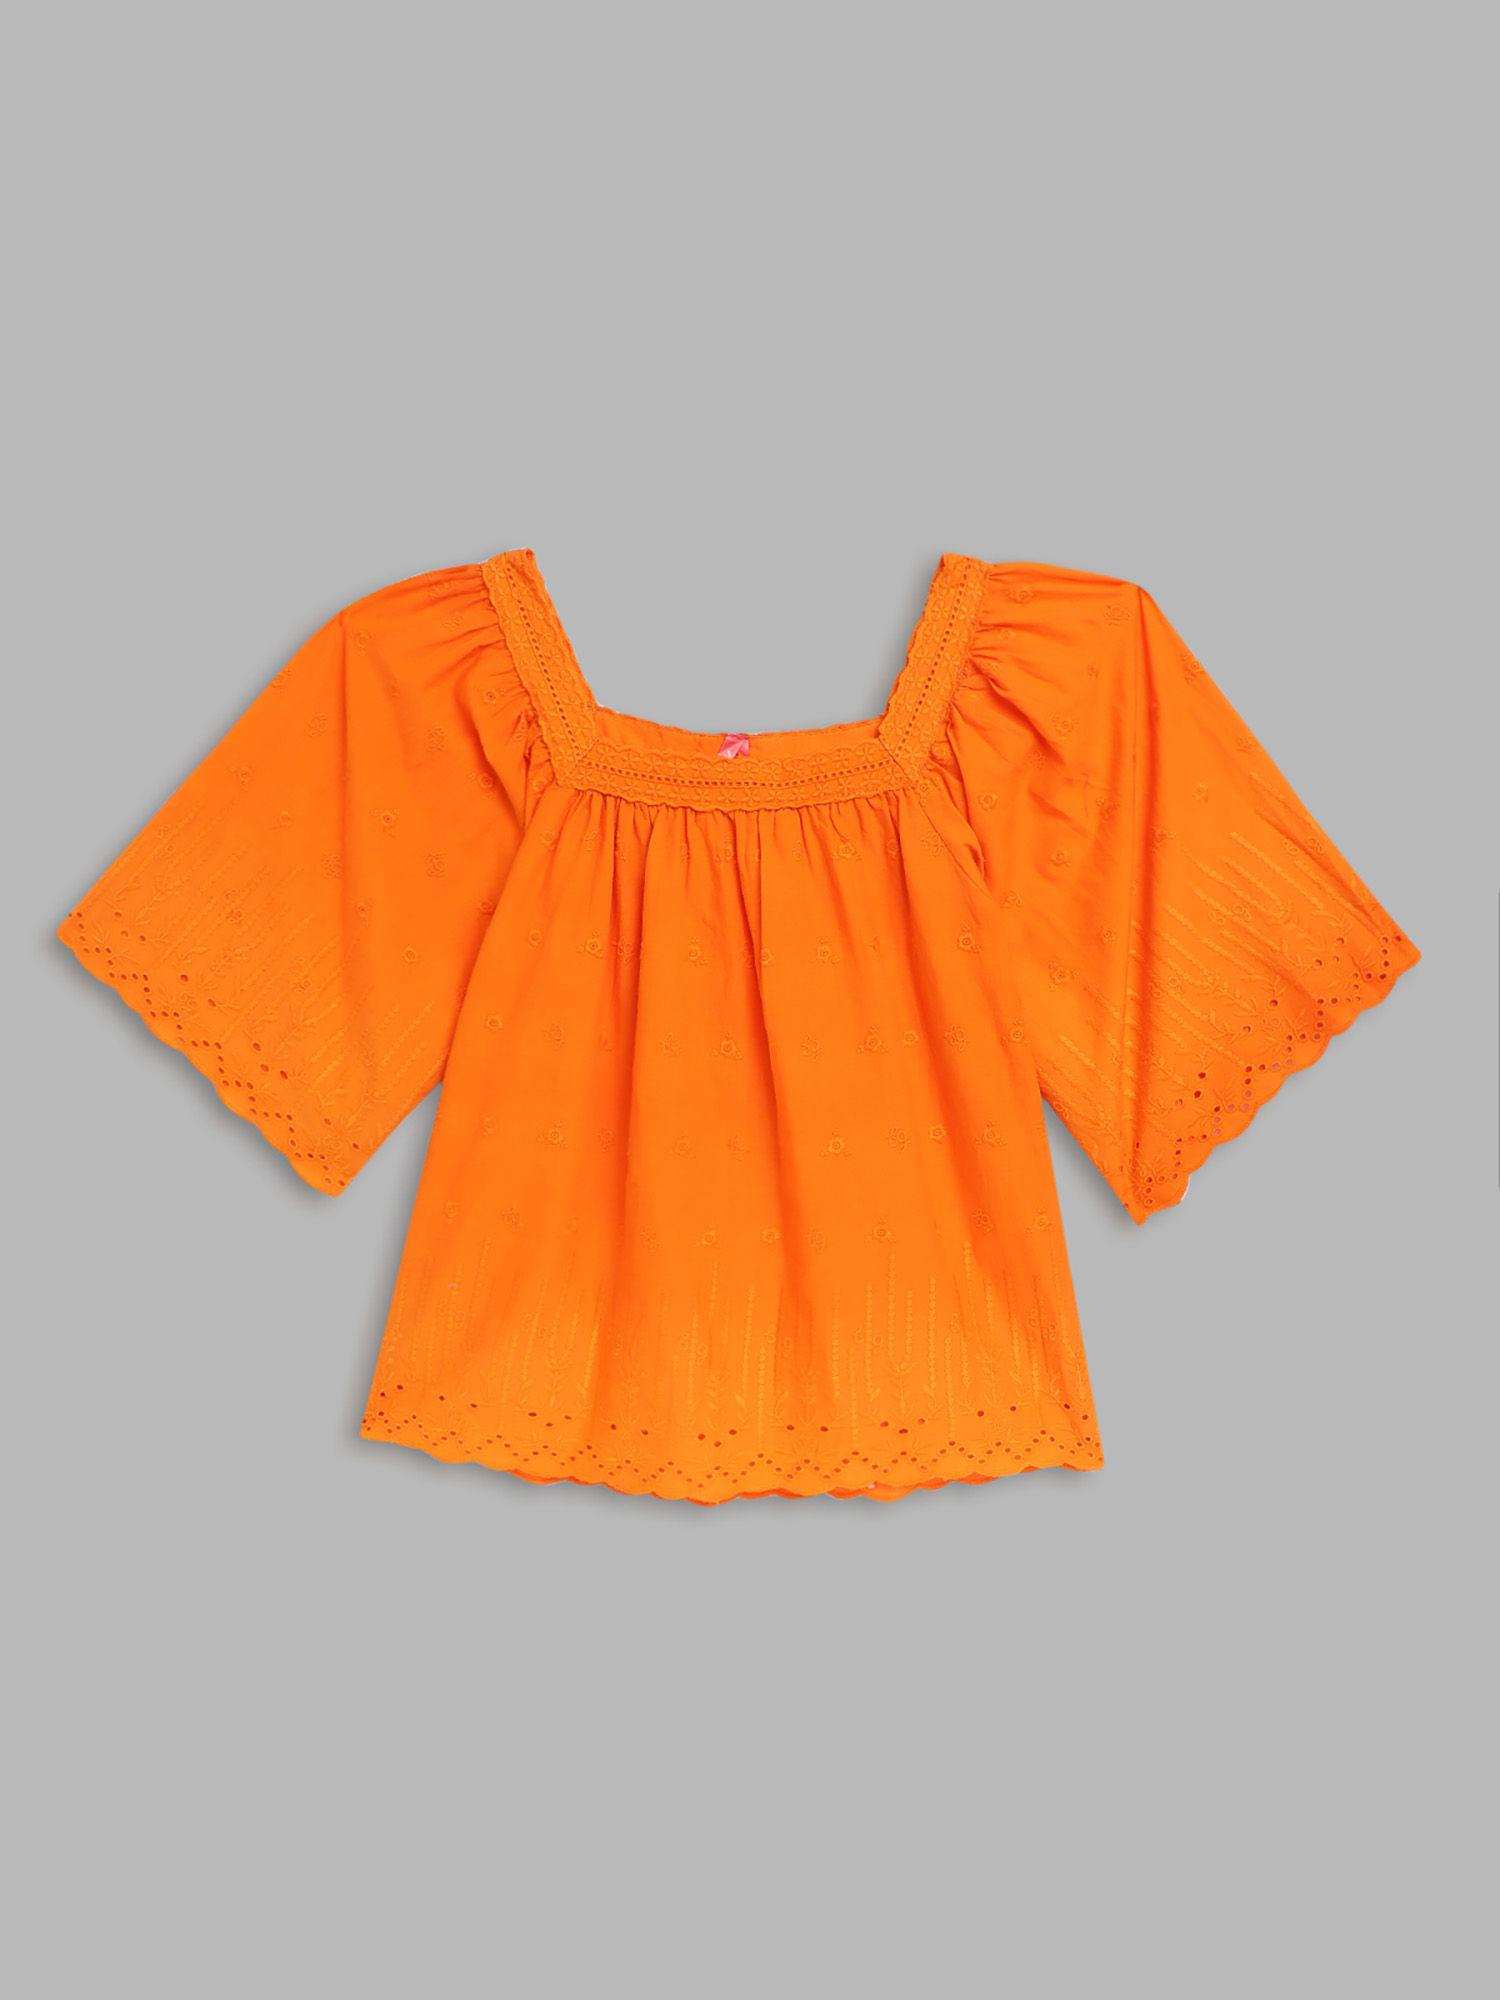 girls orange embroidered top